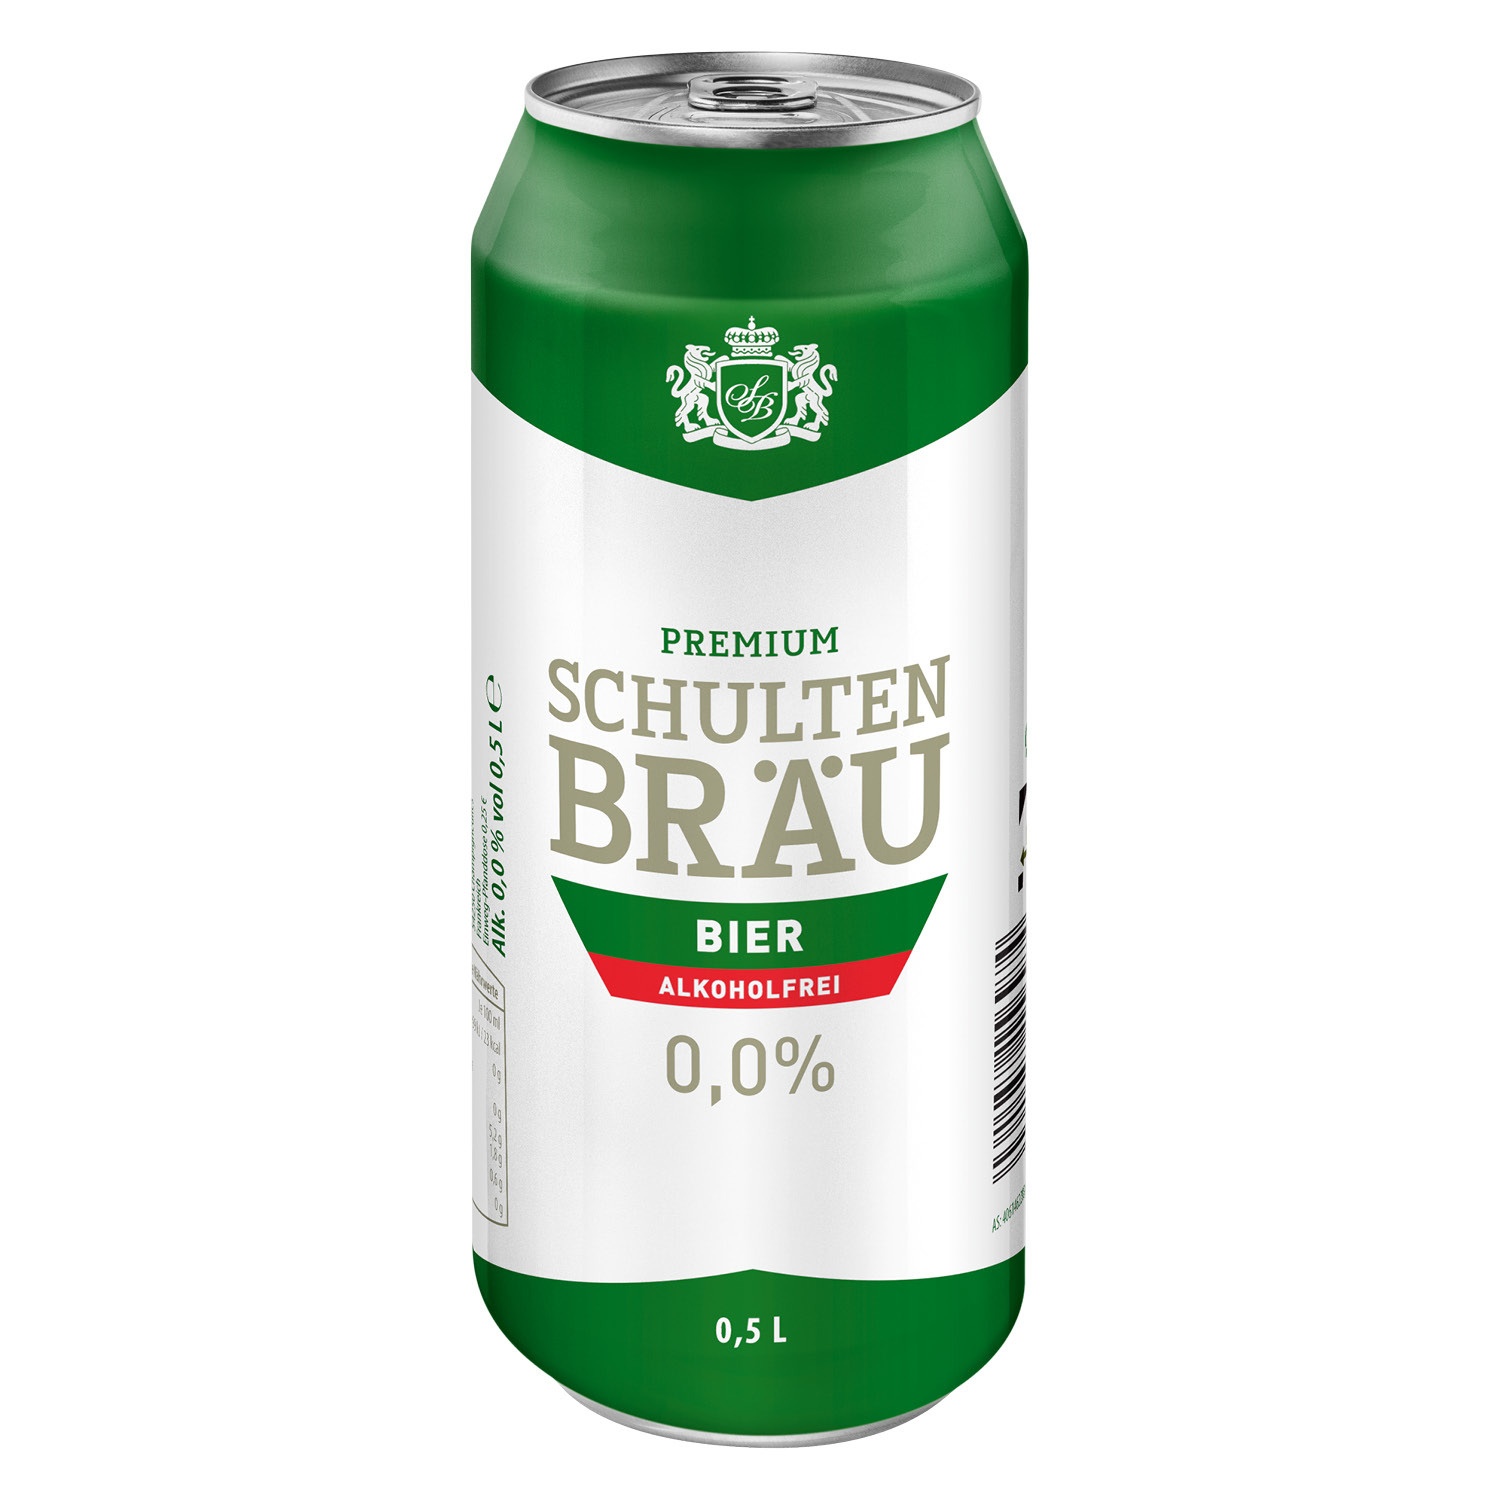 SCHULTENBRÄU Bier 0,0 % 0,5 l